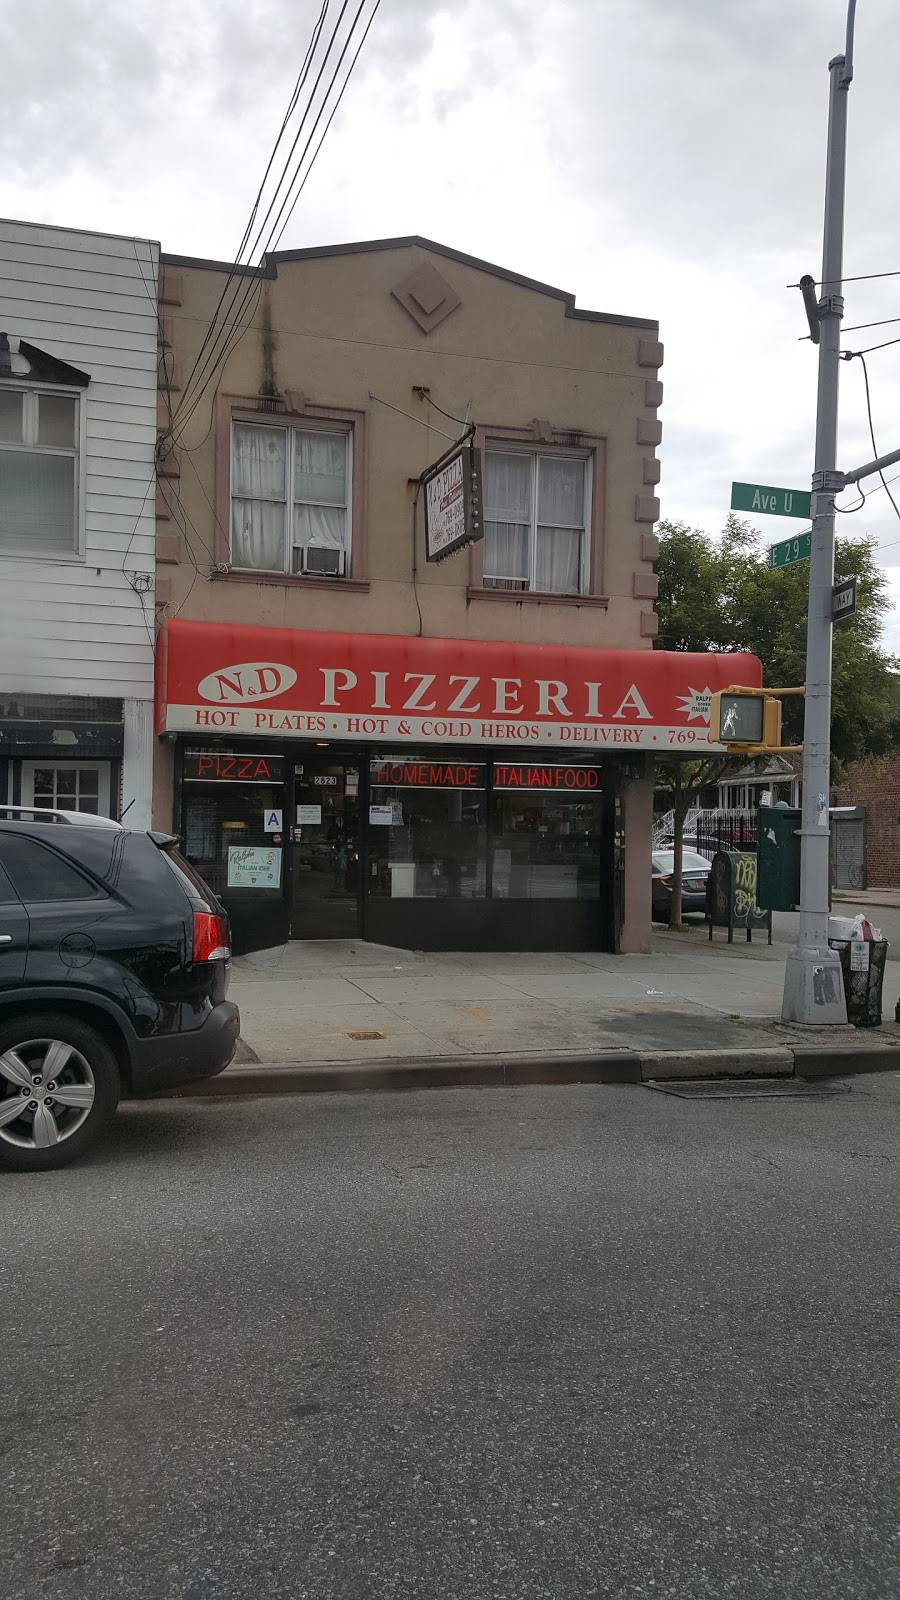 N & D Pizza East 20   Restaurant   20 Avenue U, Brooklyn, NY ...